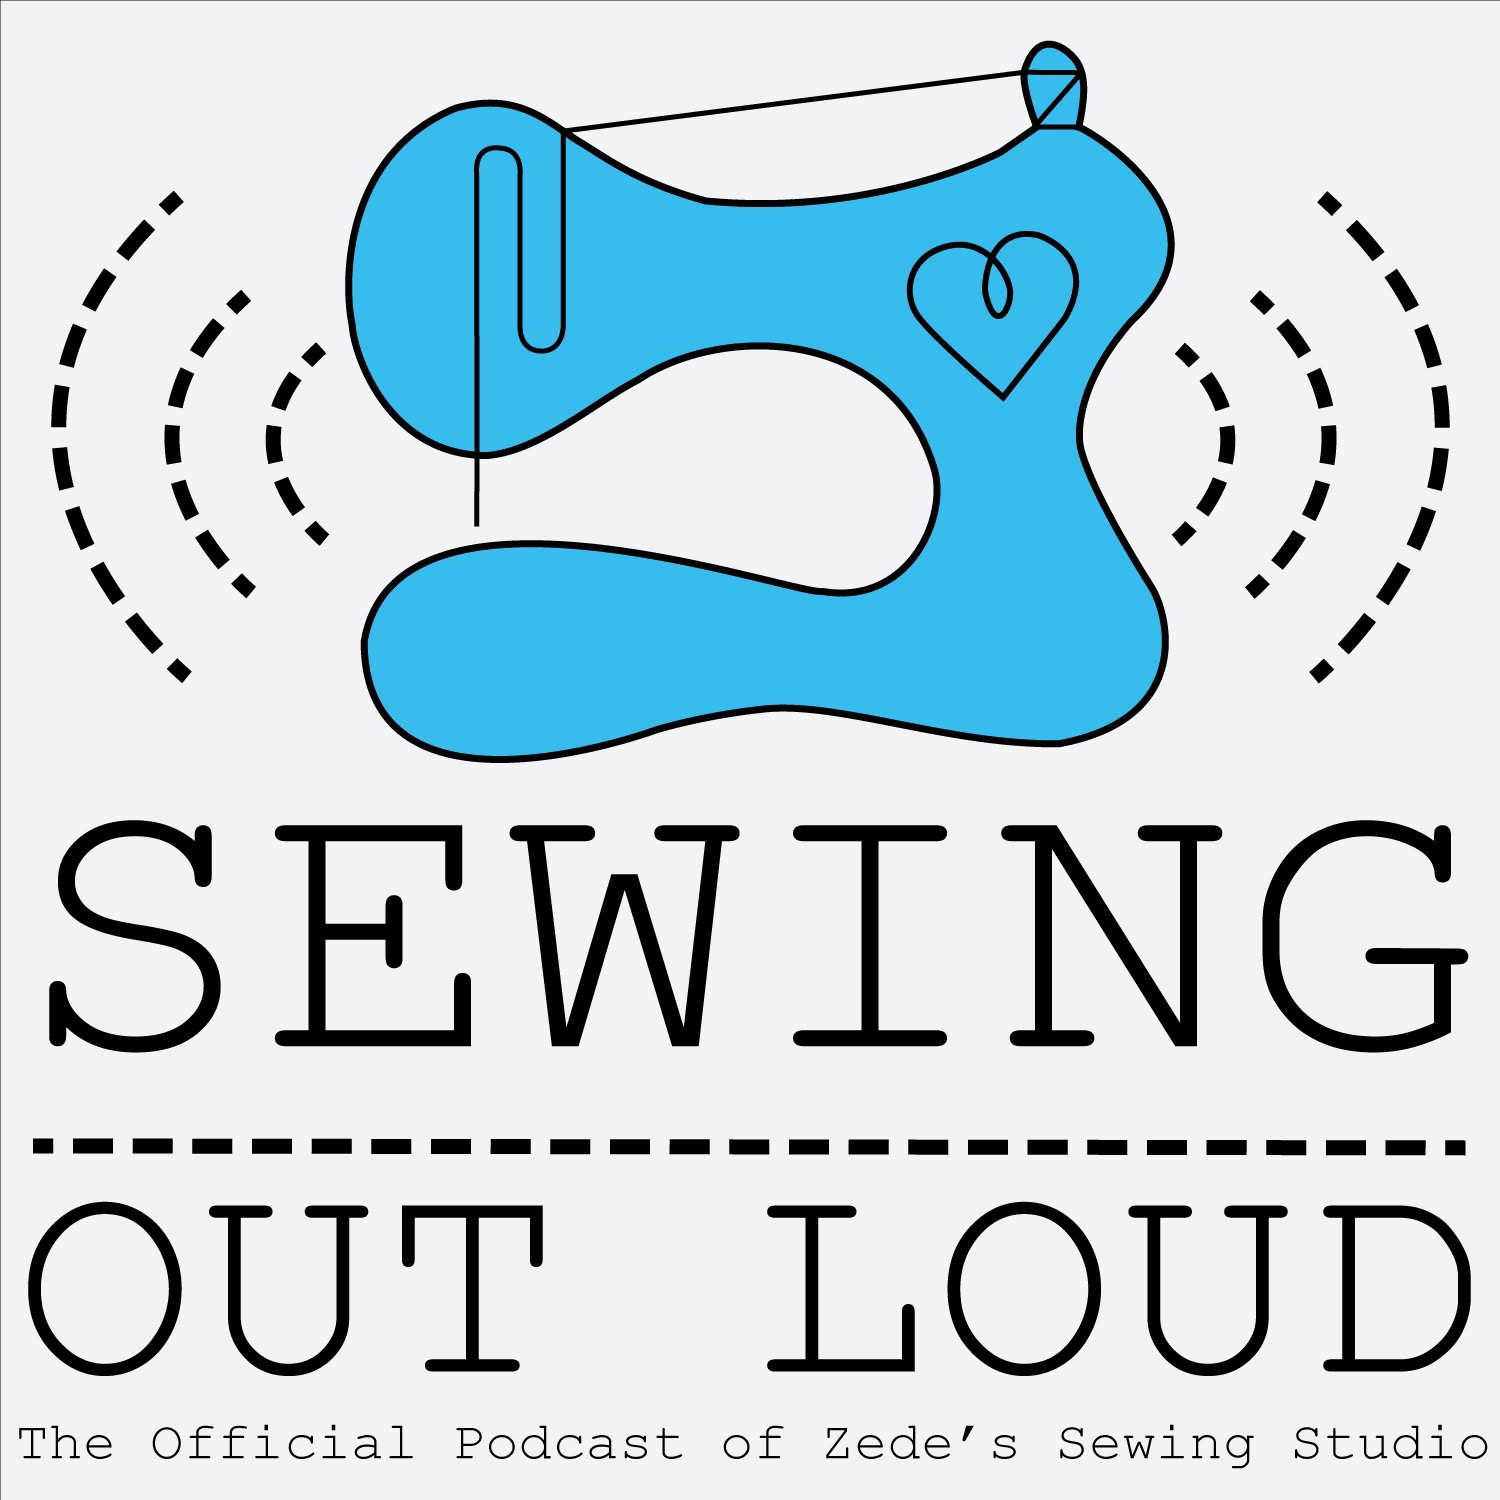 Sewing Machine Tension